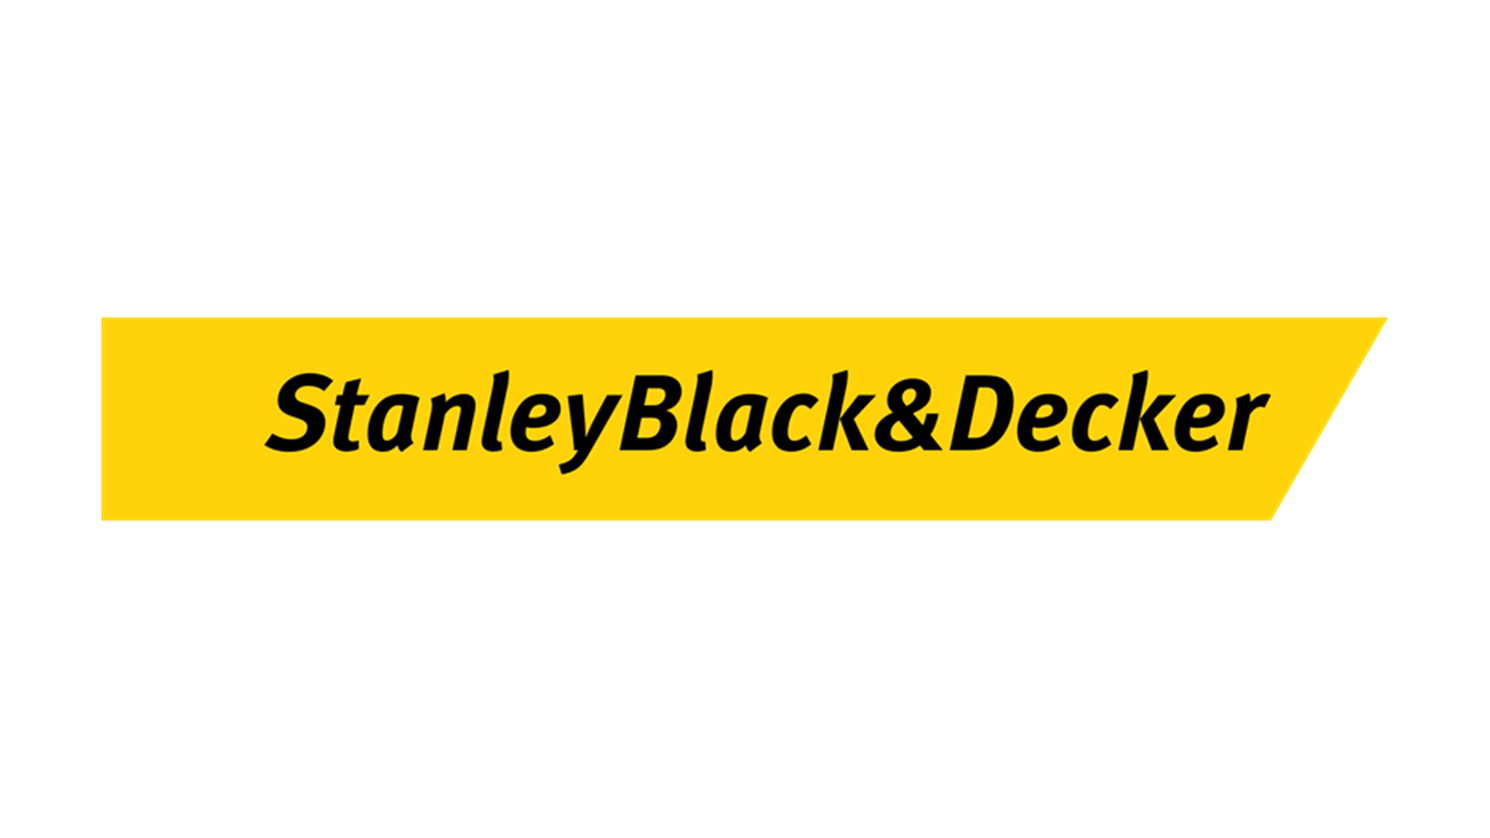 StanleyBlack and Decker Recruitment 2021